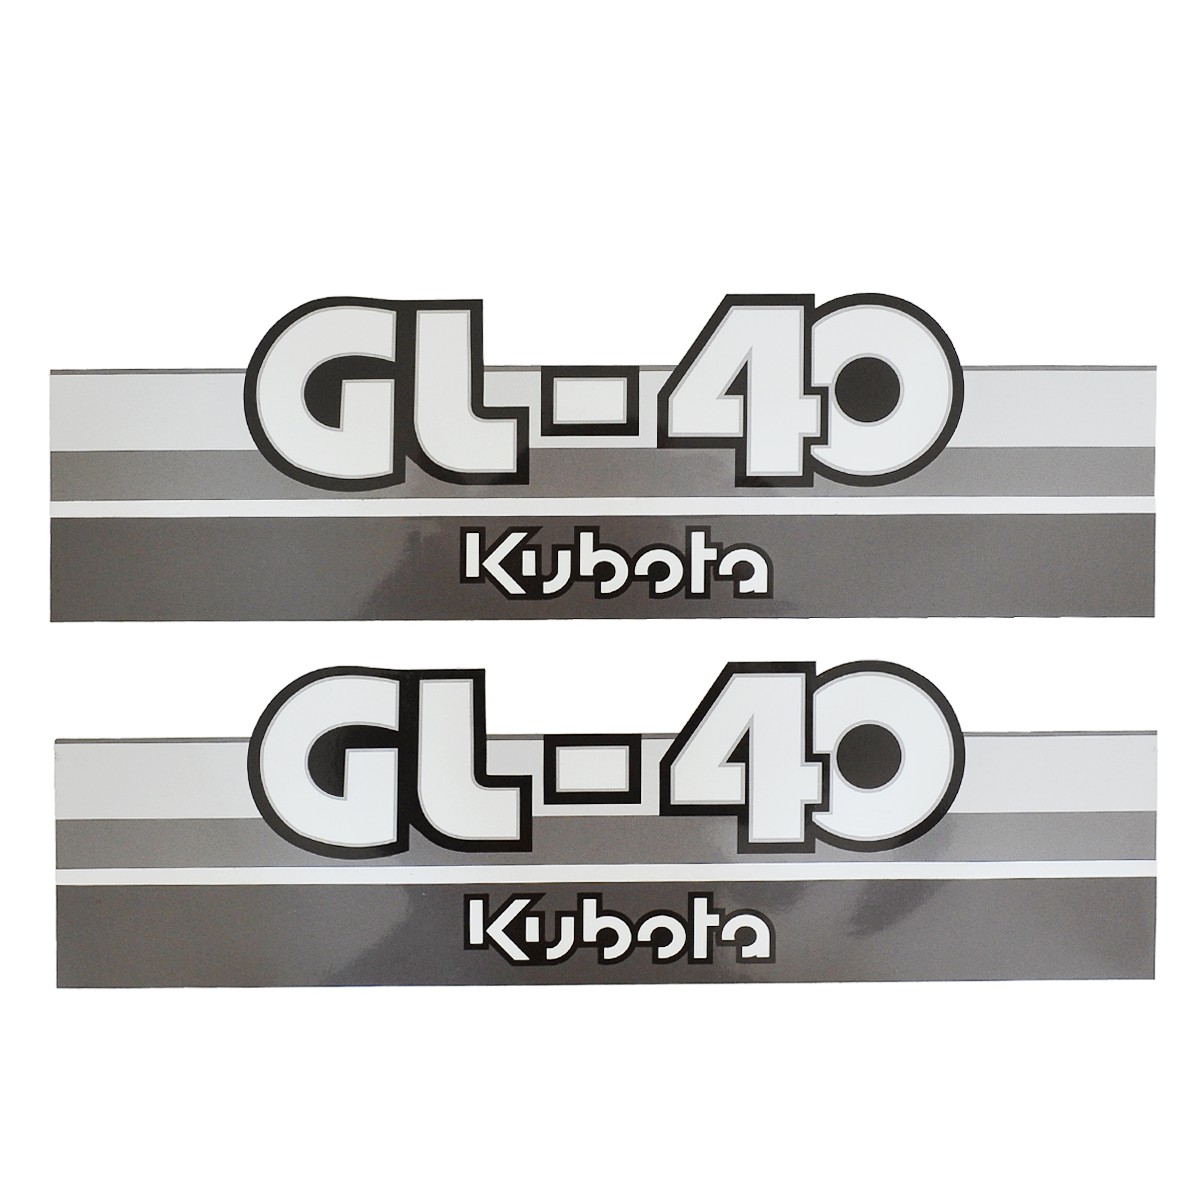 Kubota GL40 stickers